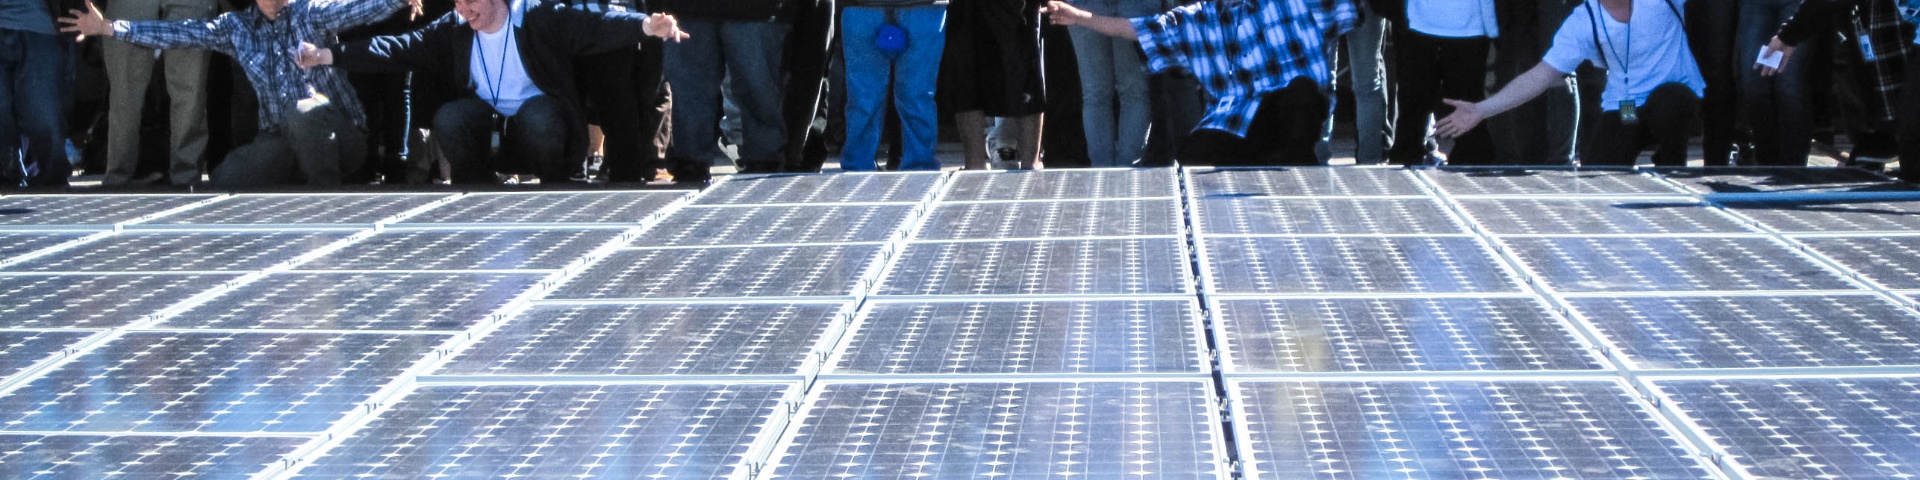 community-solar-panels-people